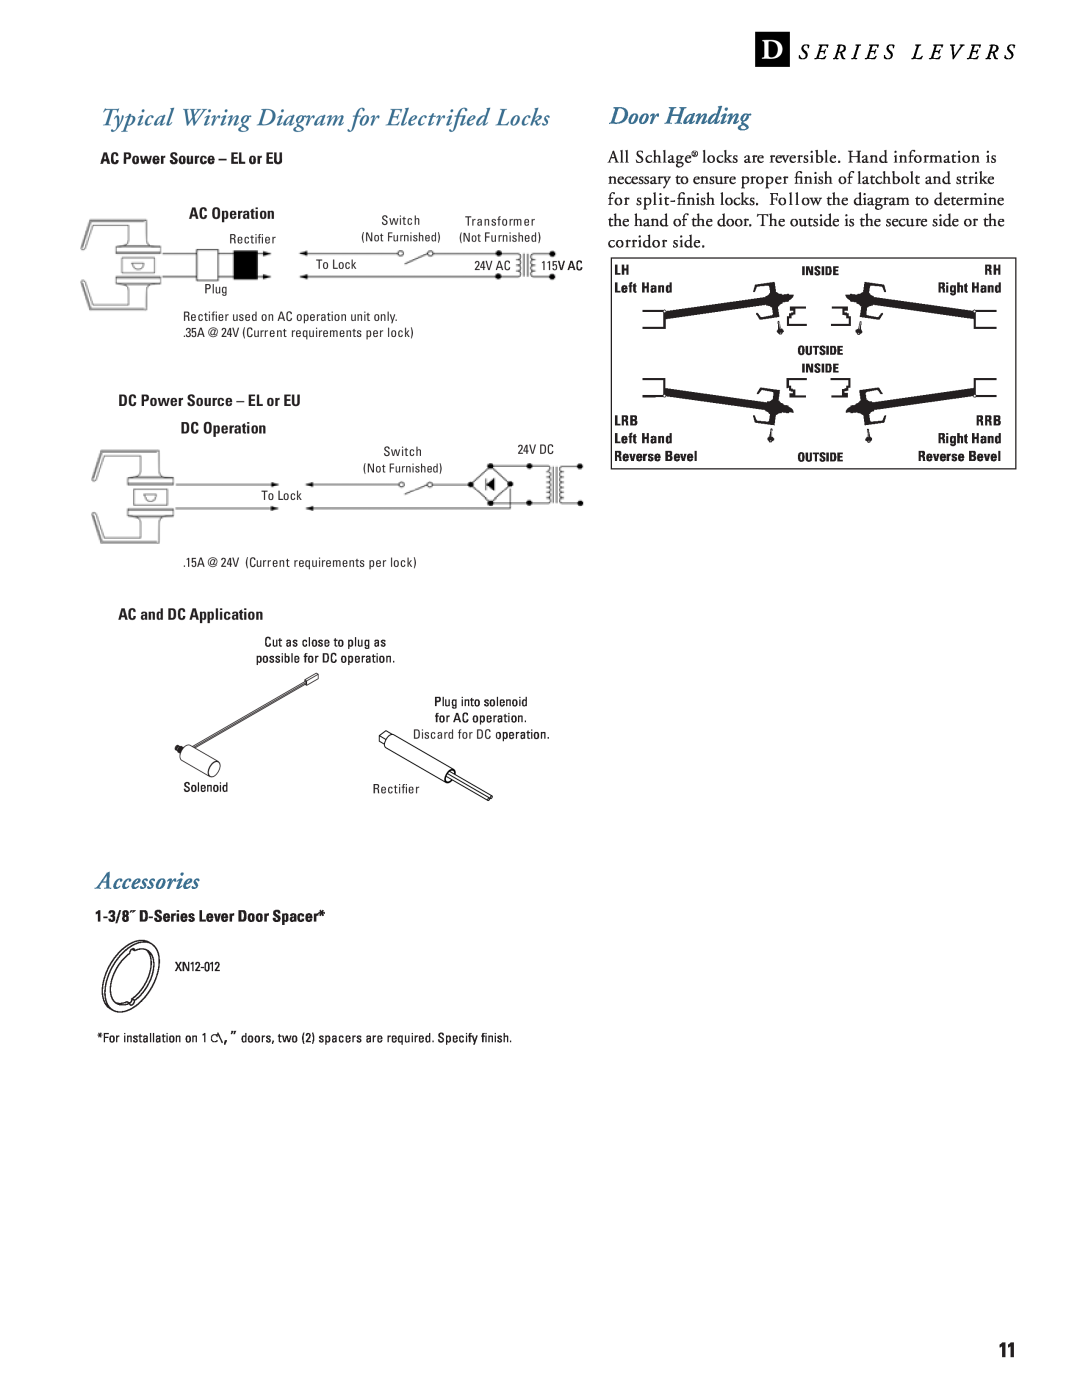 Schlage D-Series manual Typical Wiring Diagram for Electriﬁed Locks, Accessories, Door Handing 